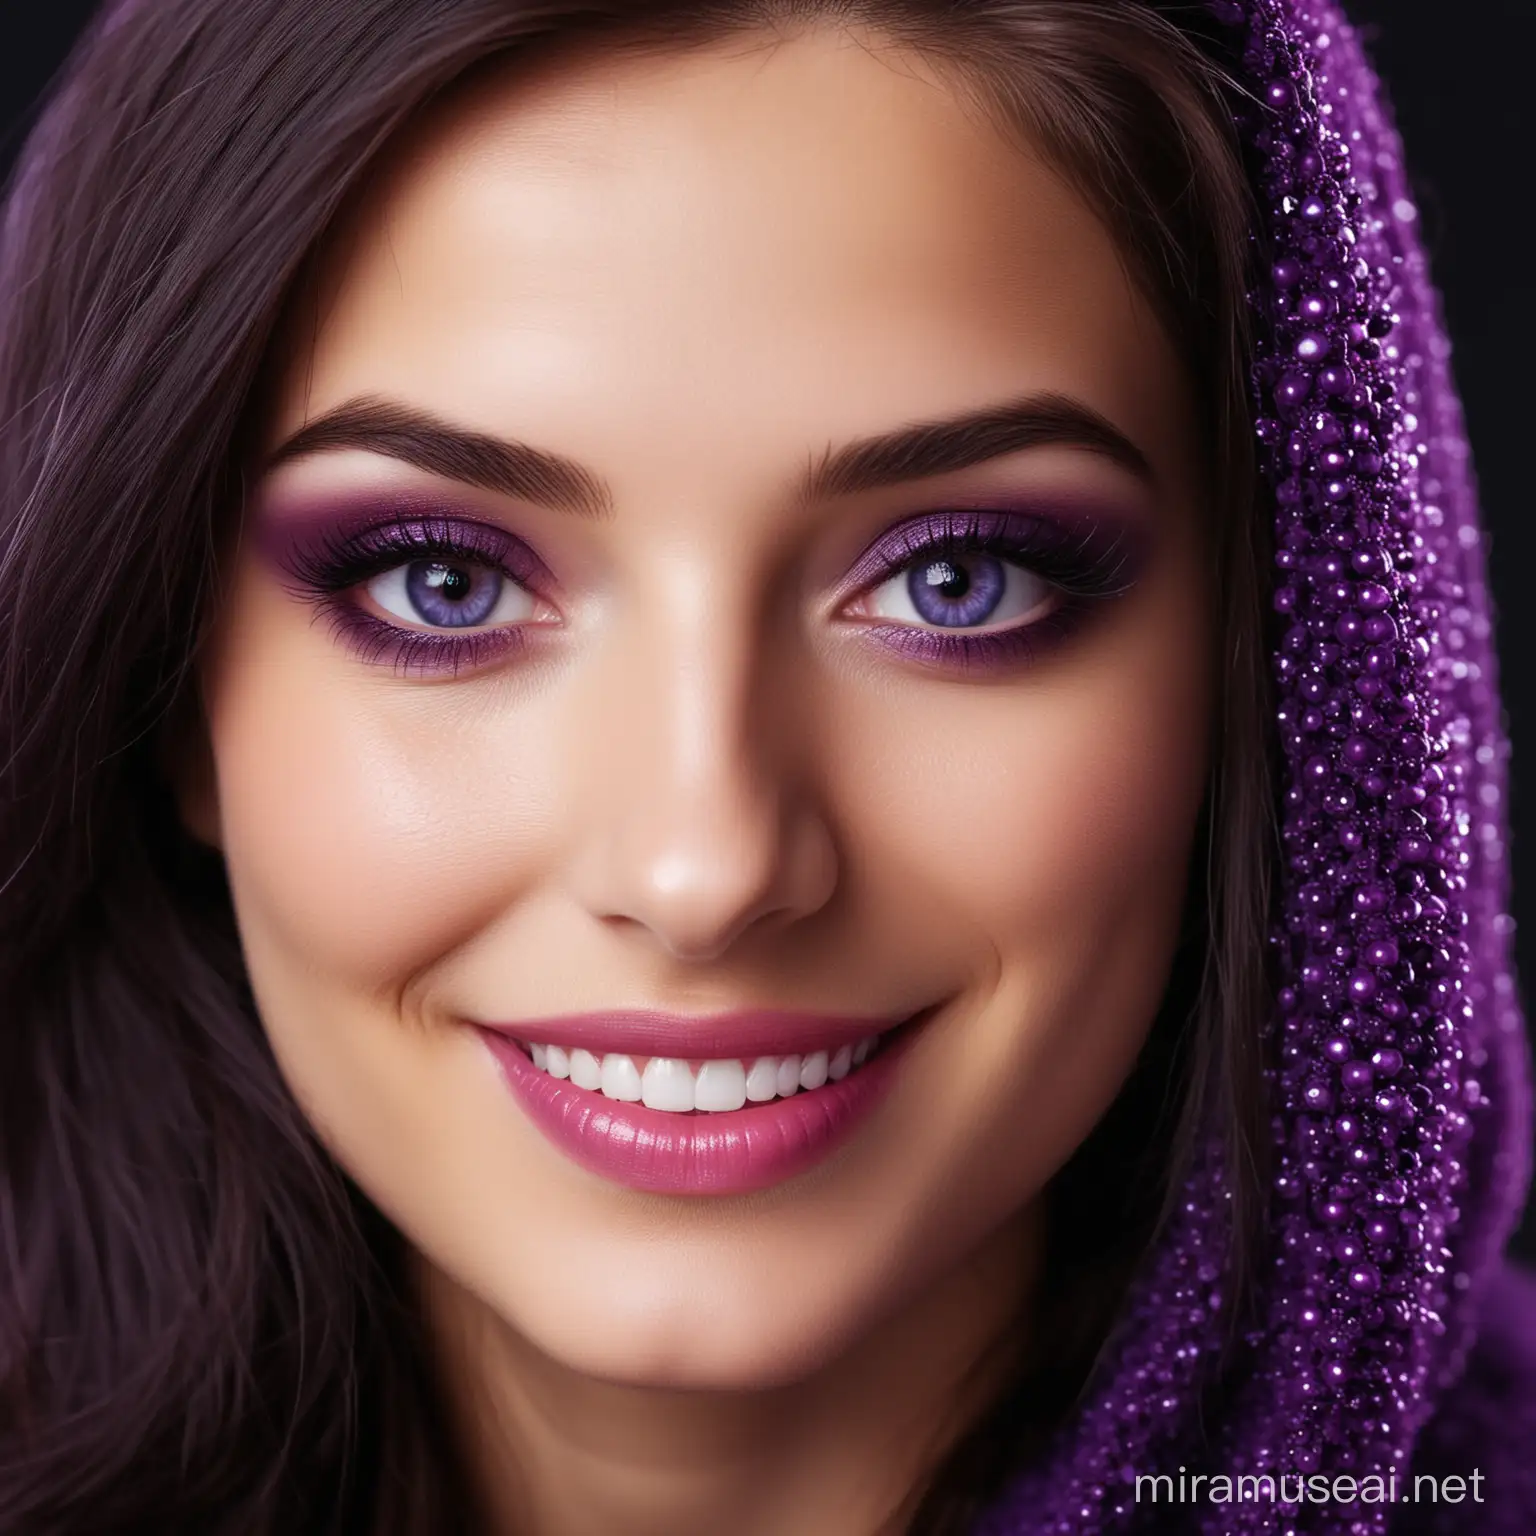 Violettfrau
Lächeln
wunderhübsch
Augen violett dunkel